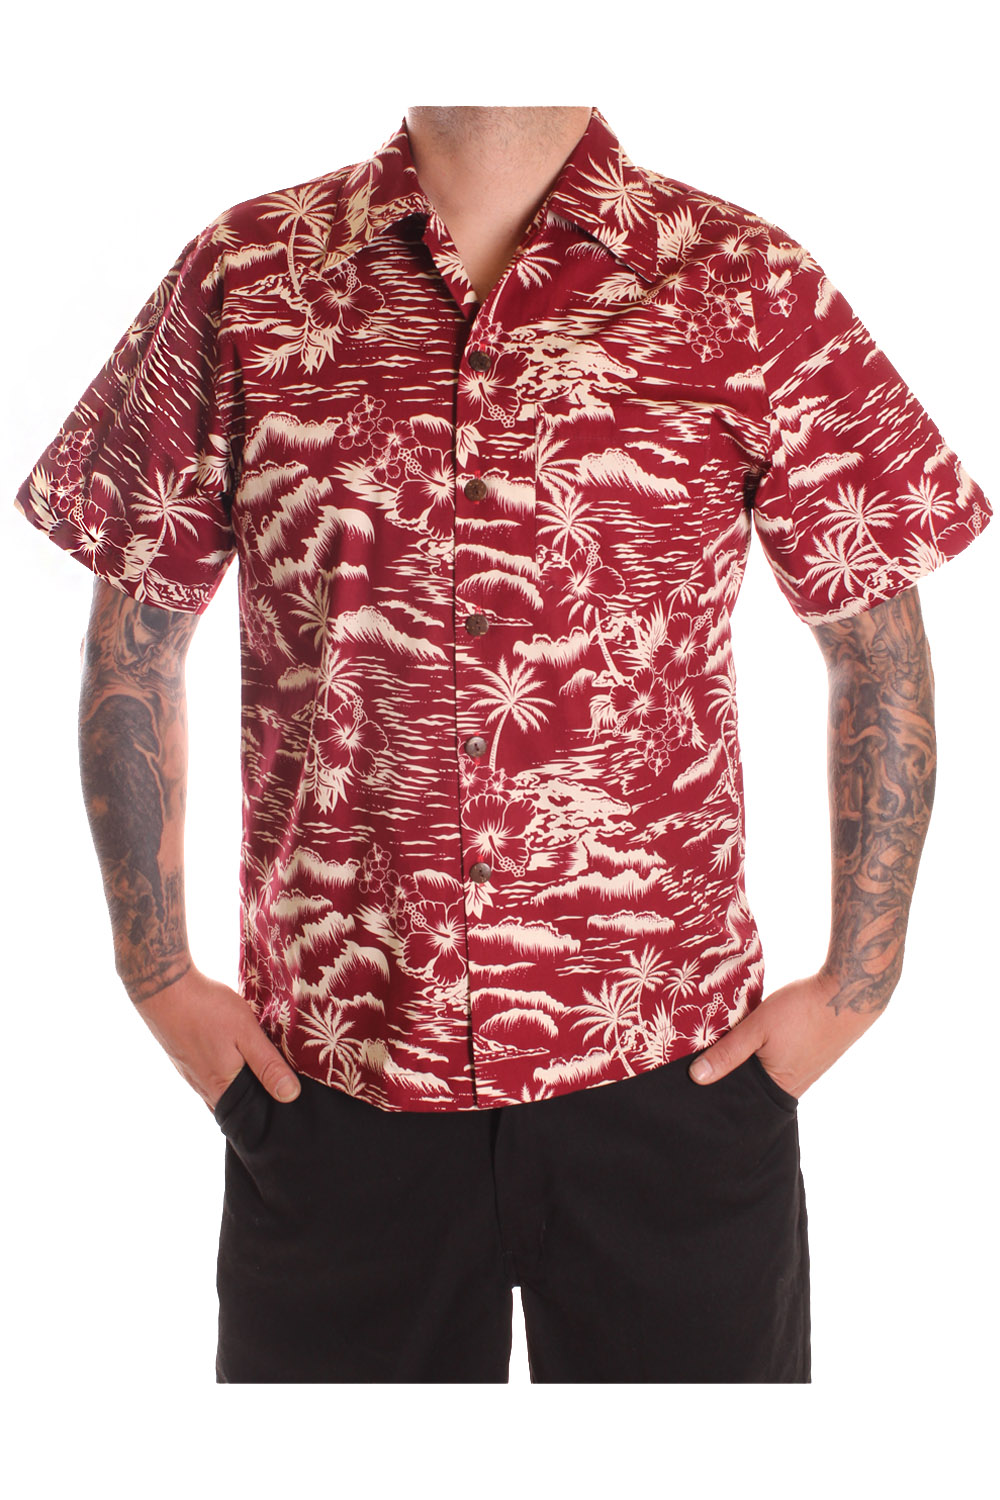 retro Hibiskus Blumen rockabilly Hawaiihemd Hawaii Shirt weinrot b